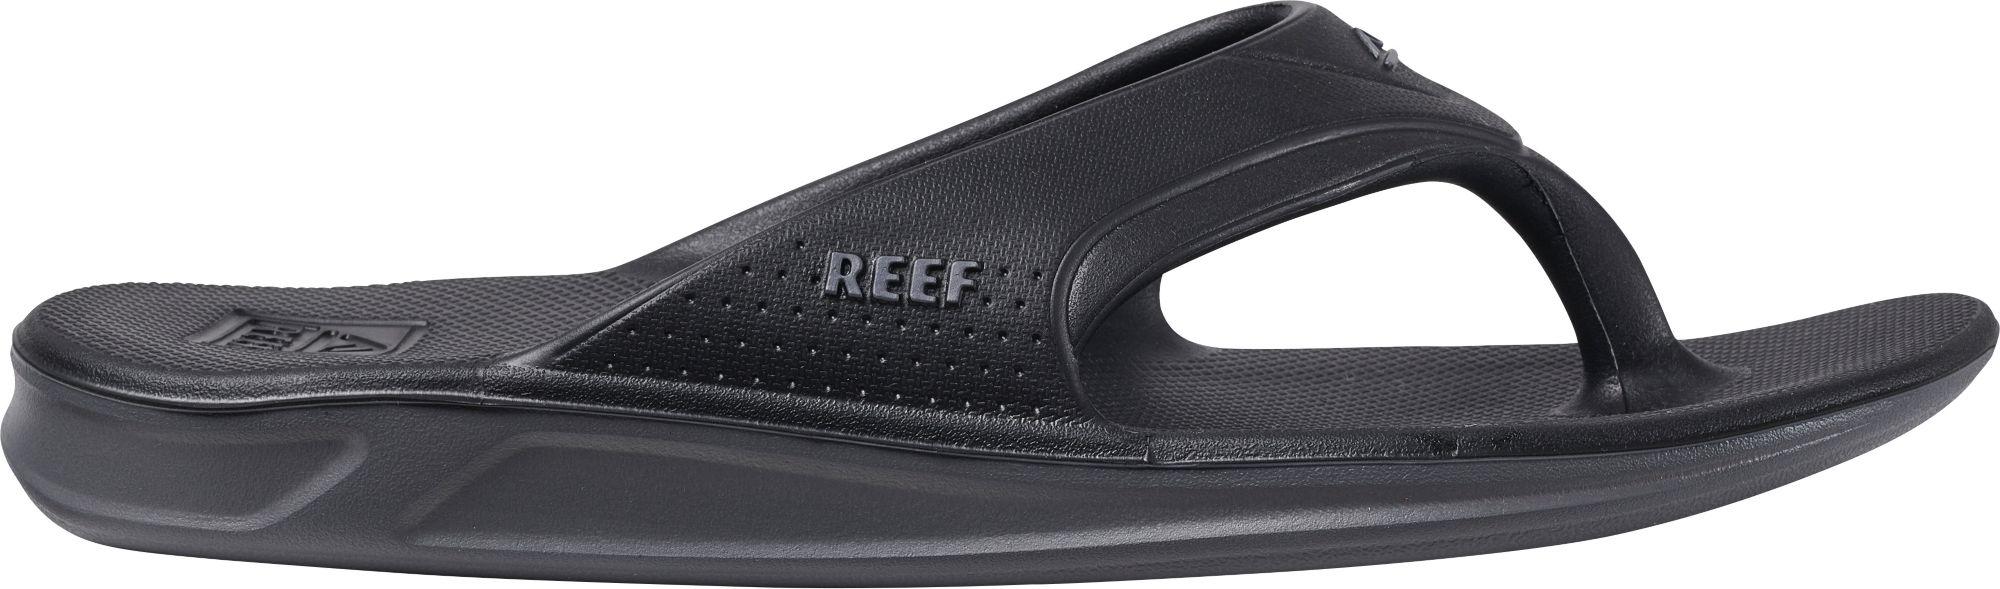 Reef One Flip Flops in Black for Men - Lyst